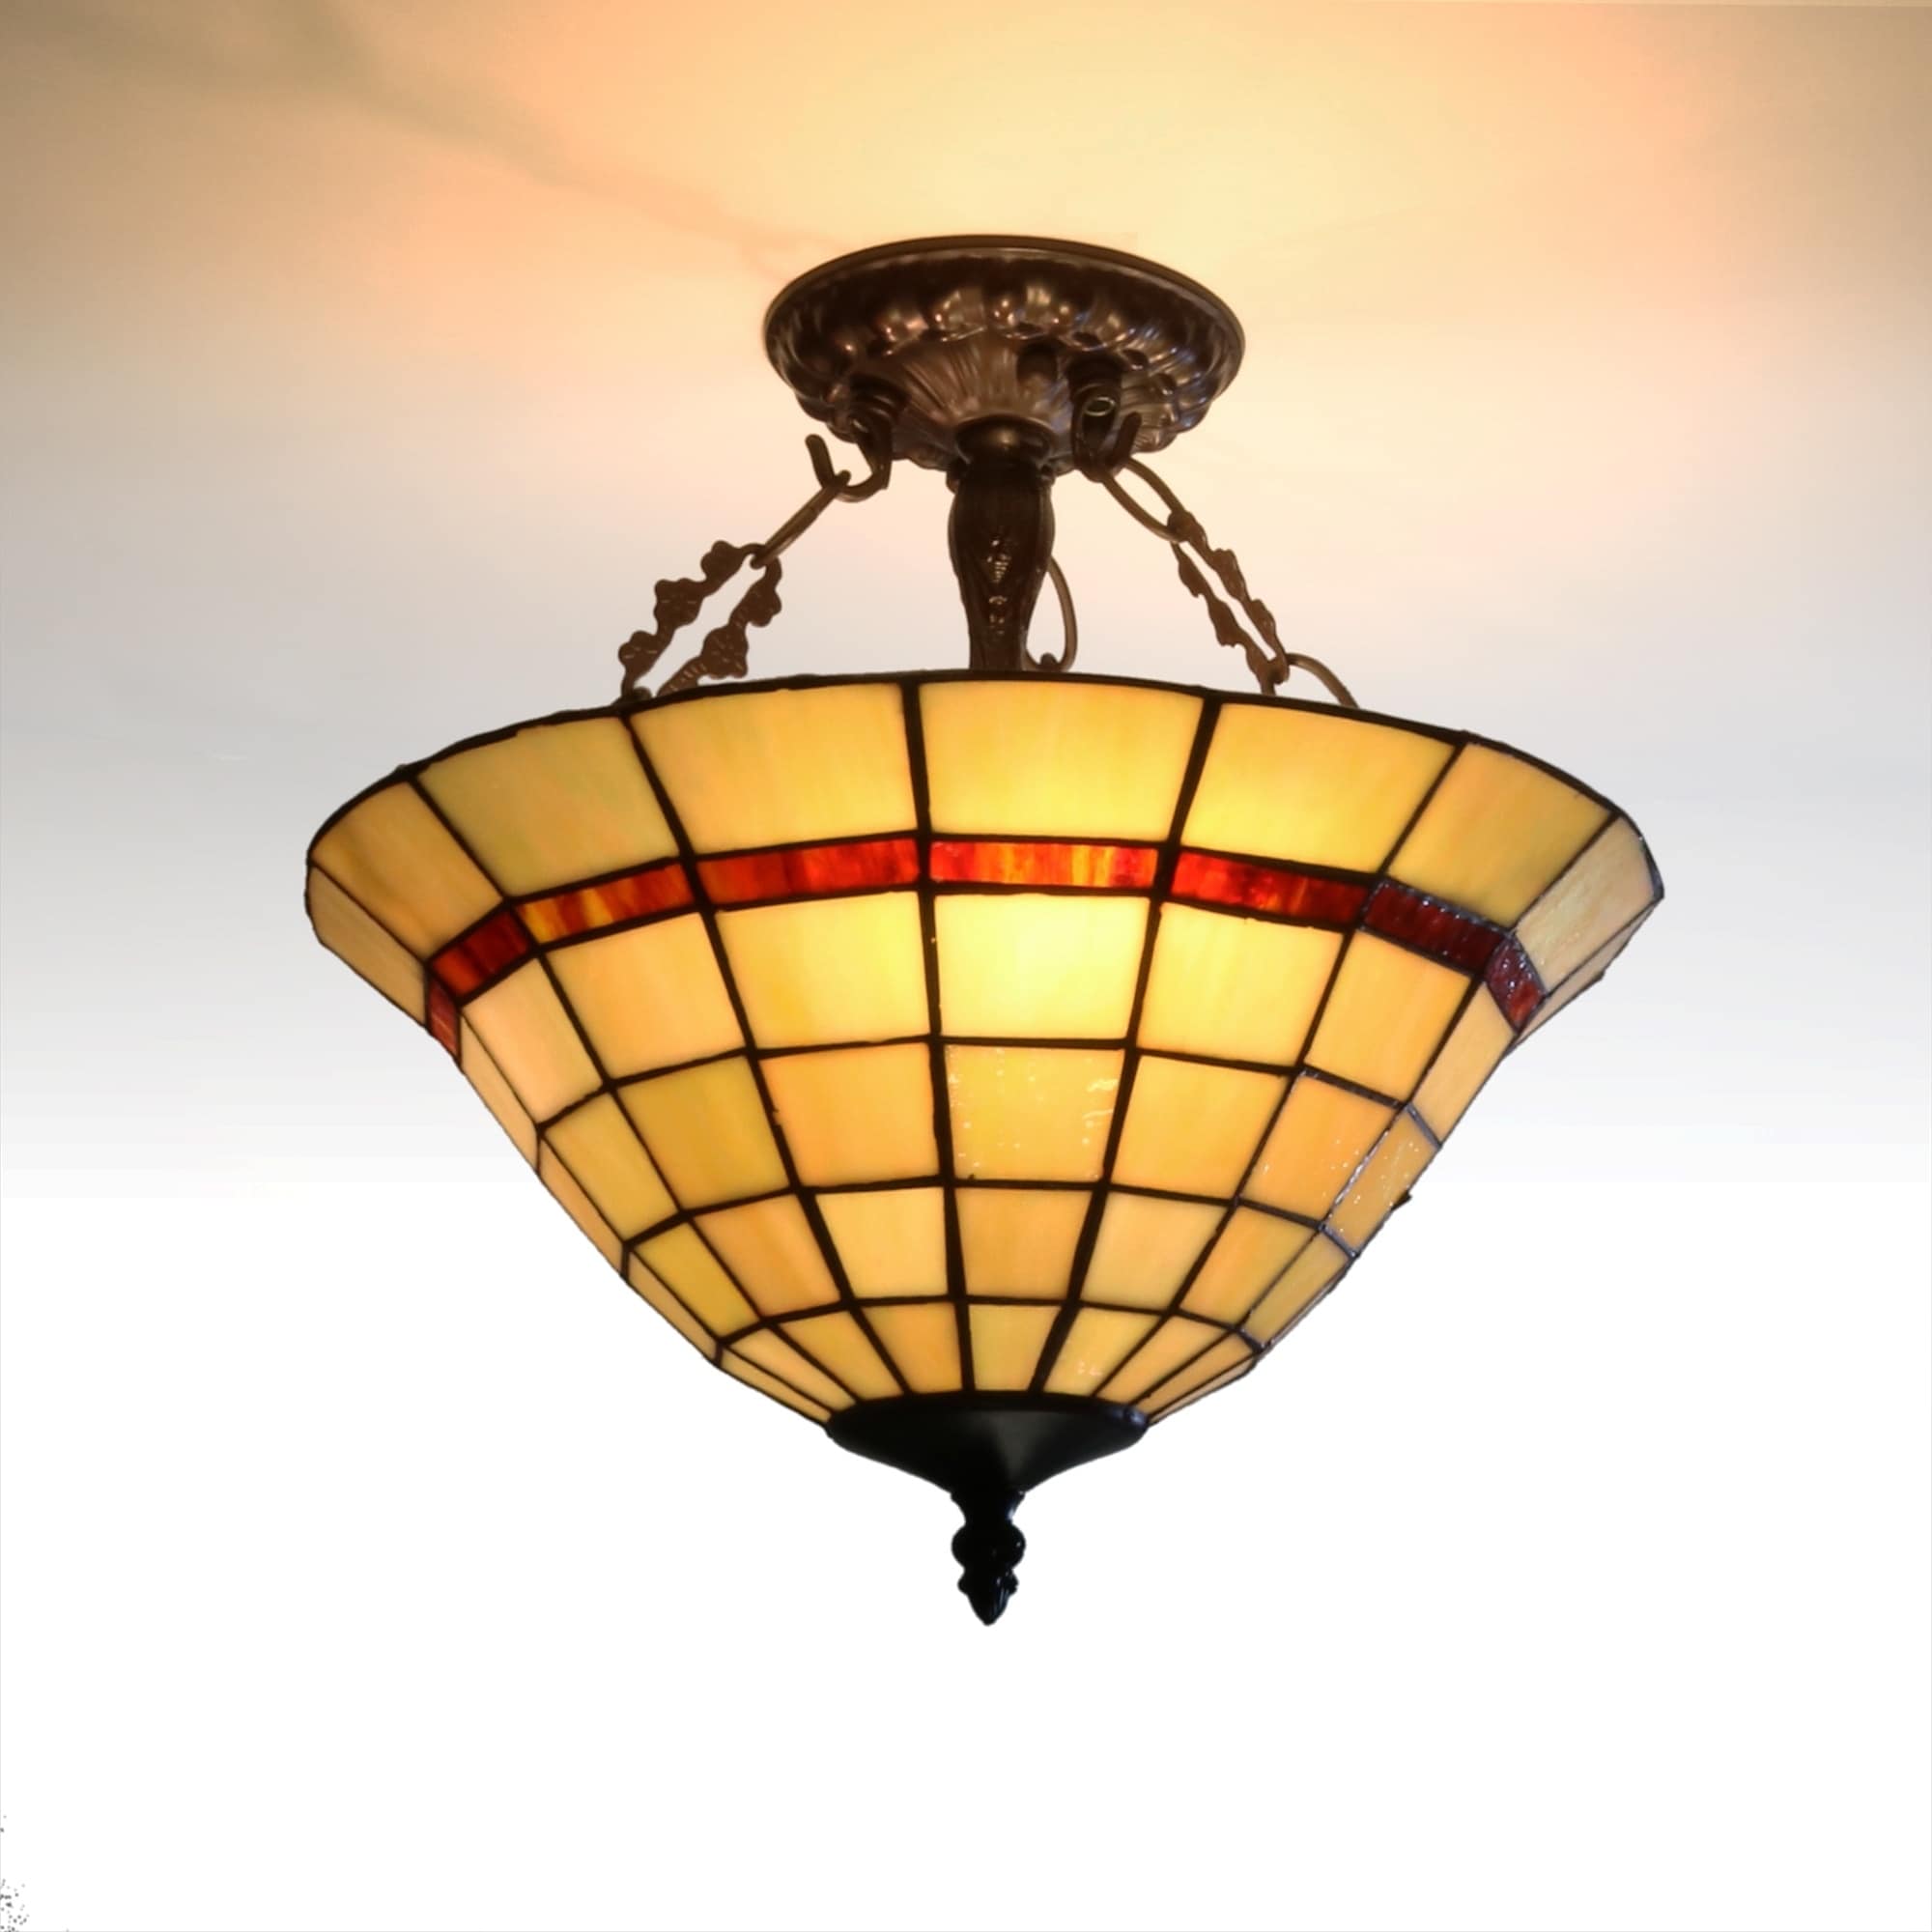 Heathcliff 14 Inch Tiffany Style Semi Flush Mount Ceiling Lamp